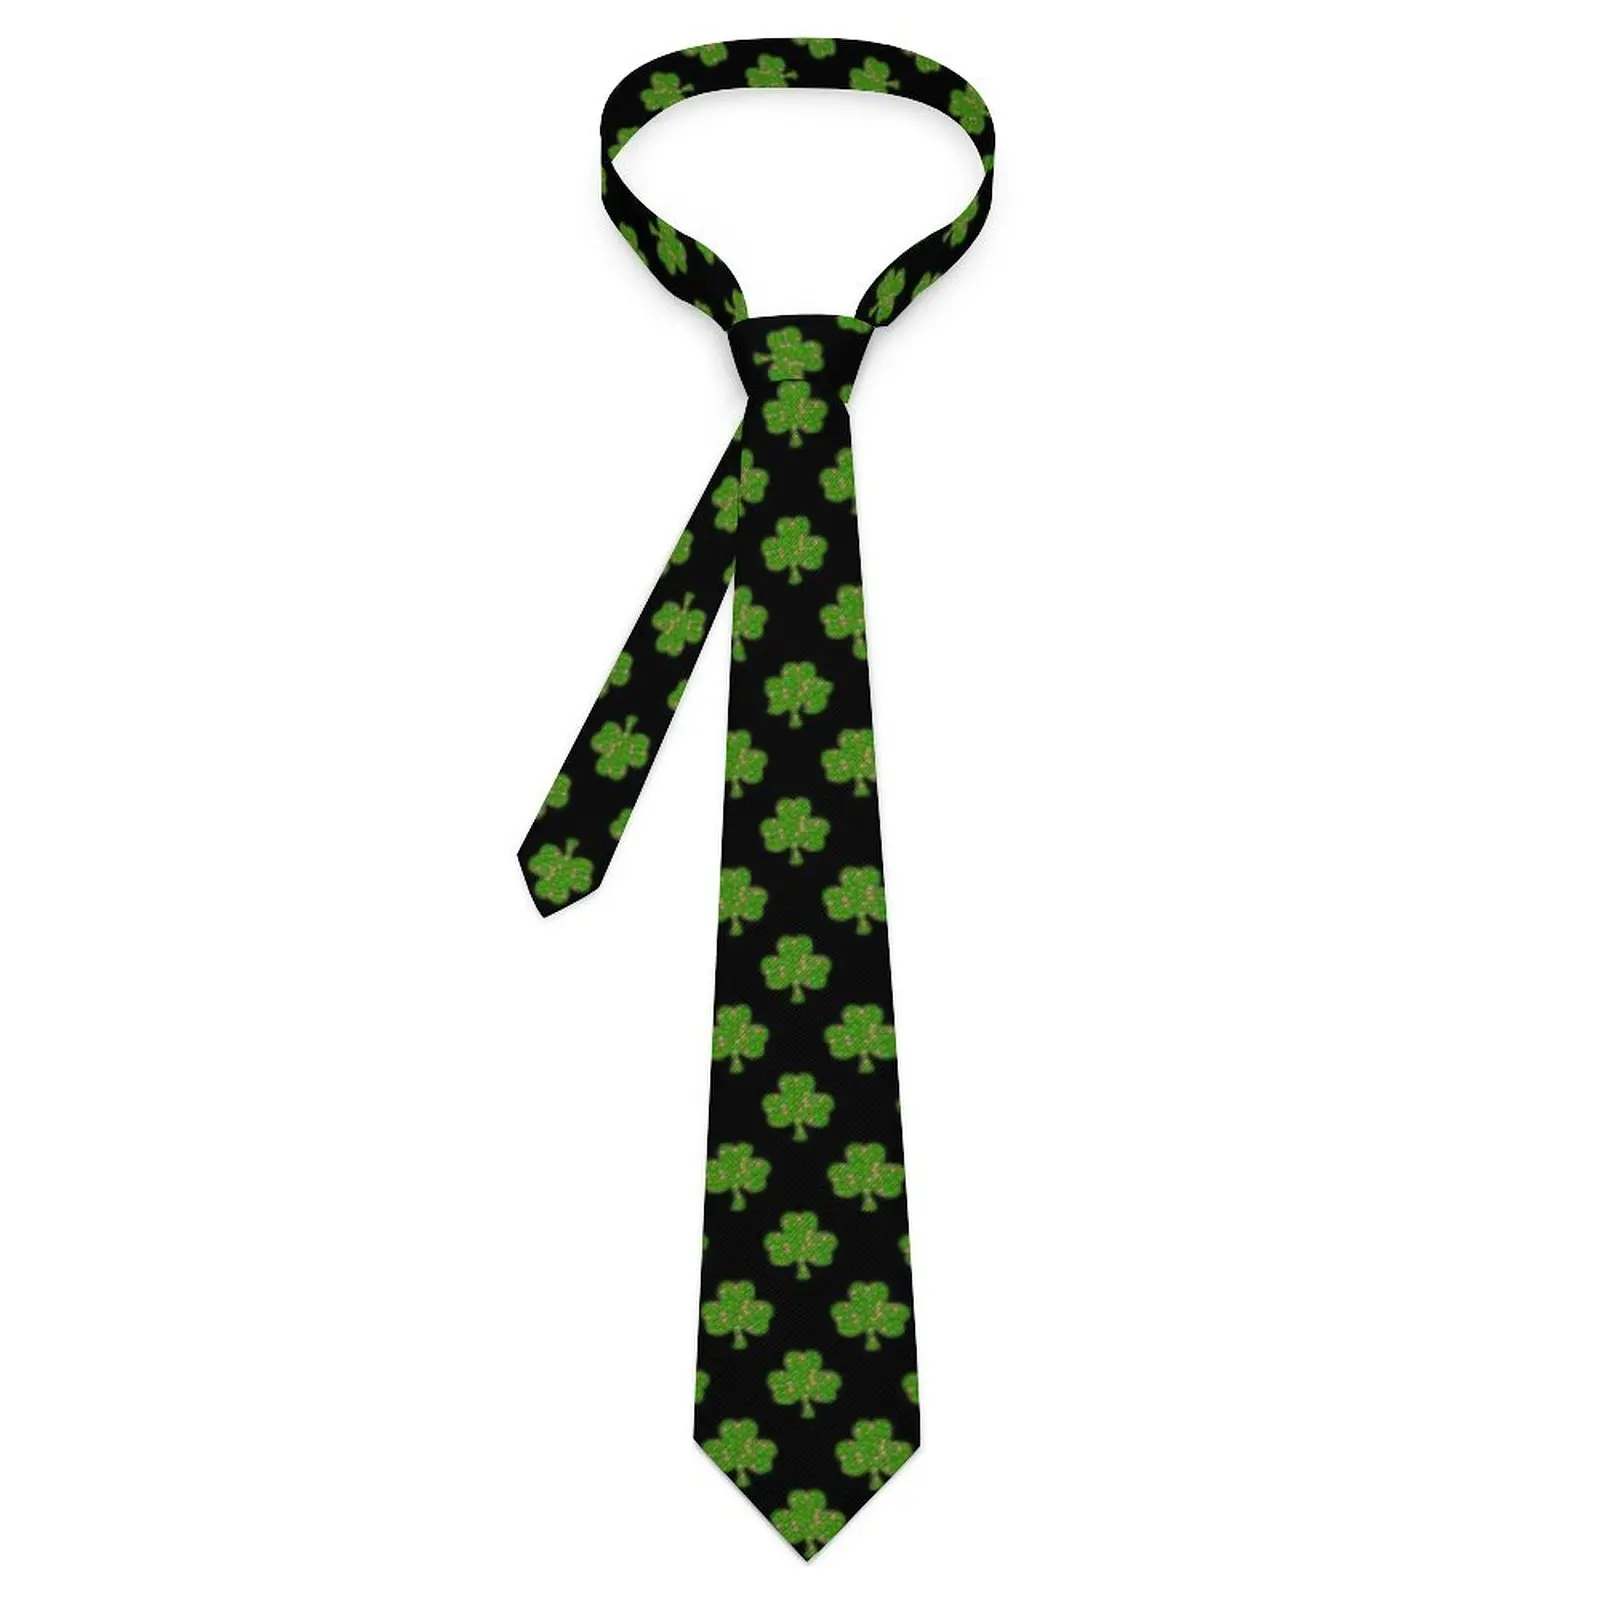 

Men's Tie Irish Shamrock Neck Ties Green Leaf Print Vintage Cool Collar Tie Design Wedding Quality Necktie Accessories